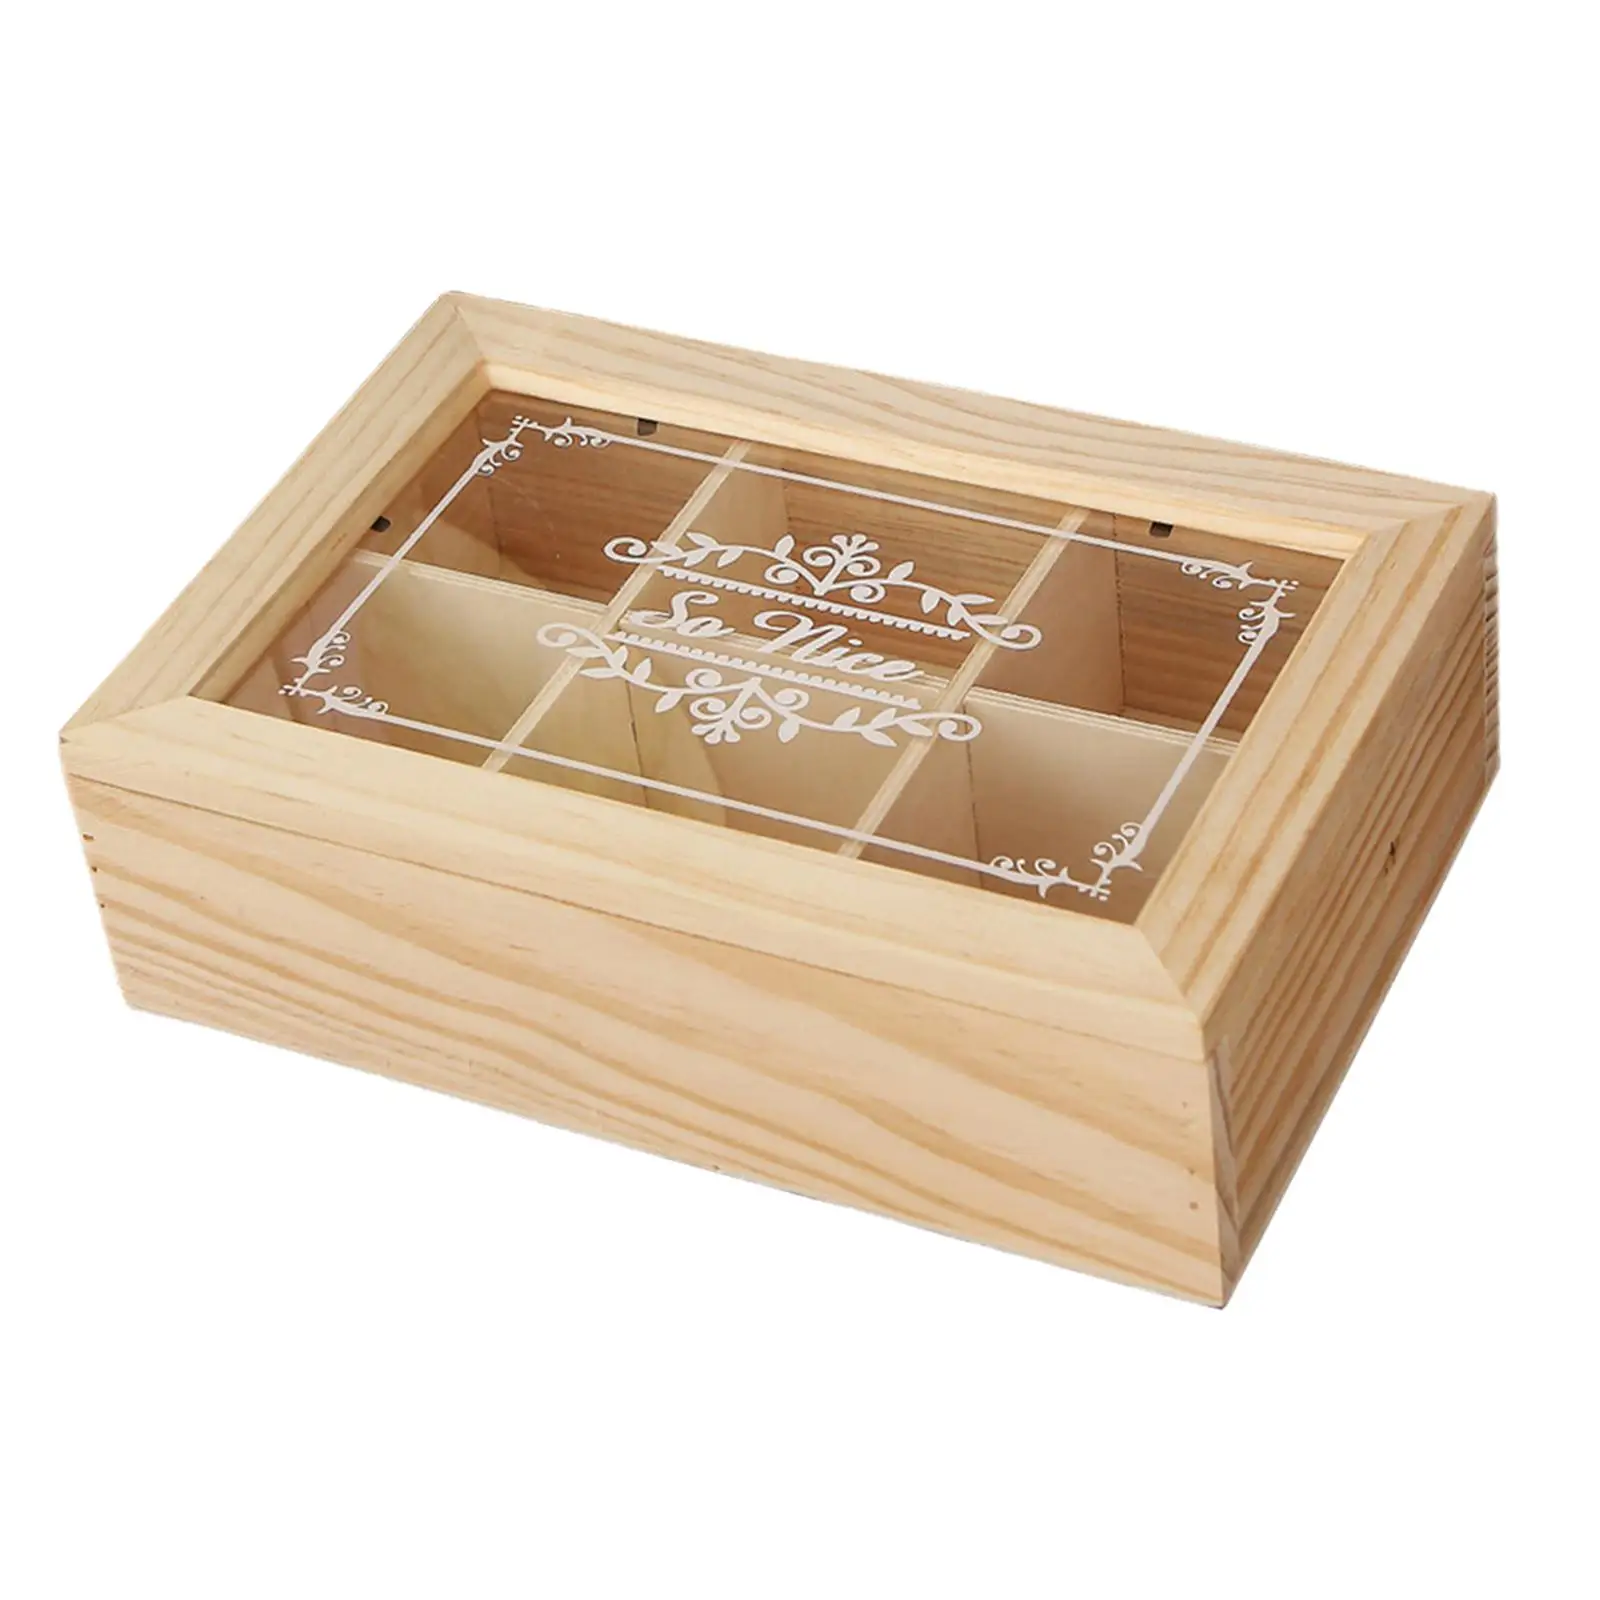 Wooden Tea Box Jewelry Box with Lid Tea Storage Organizer Small Wooden Box